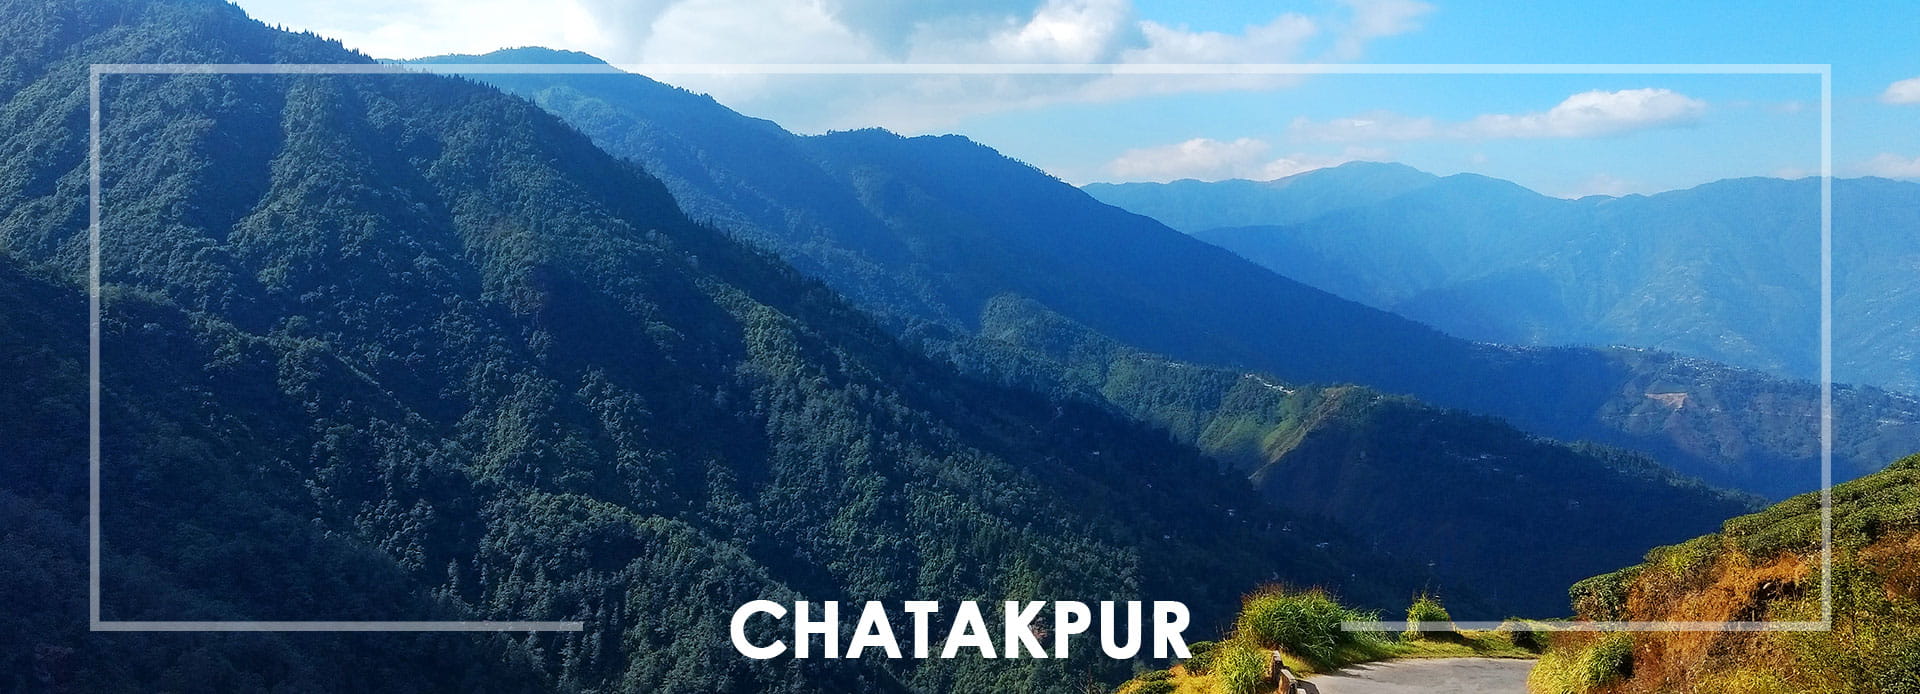  Chatakpur